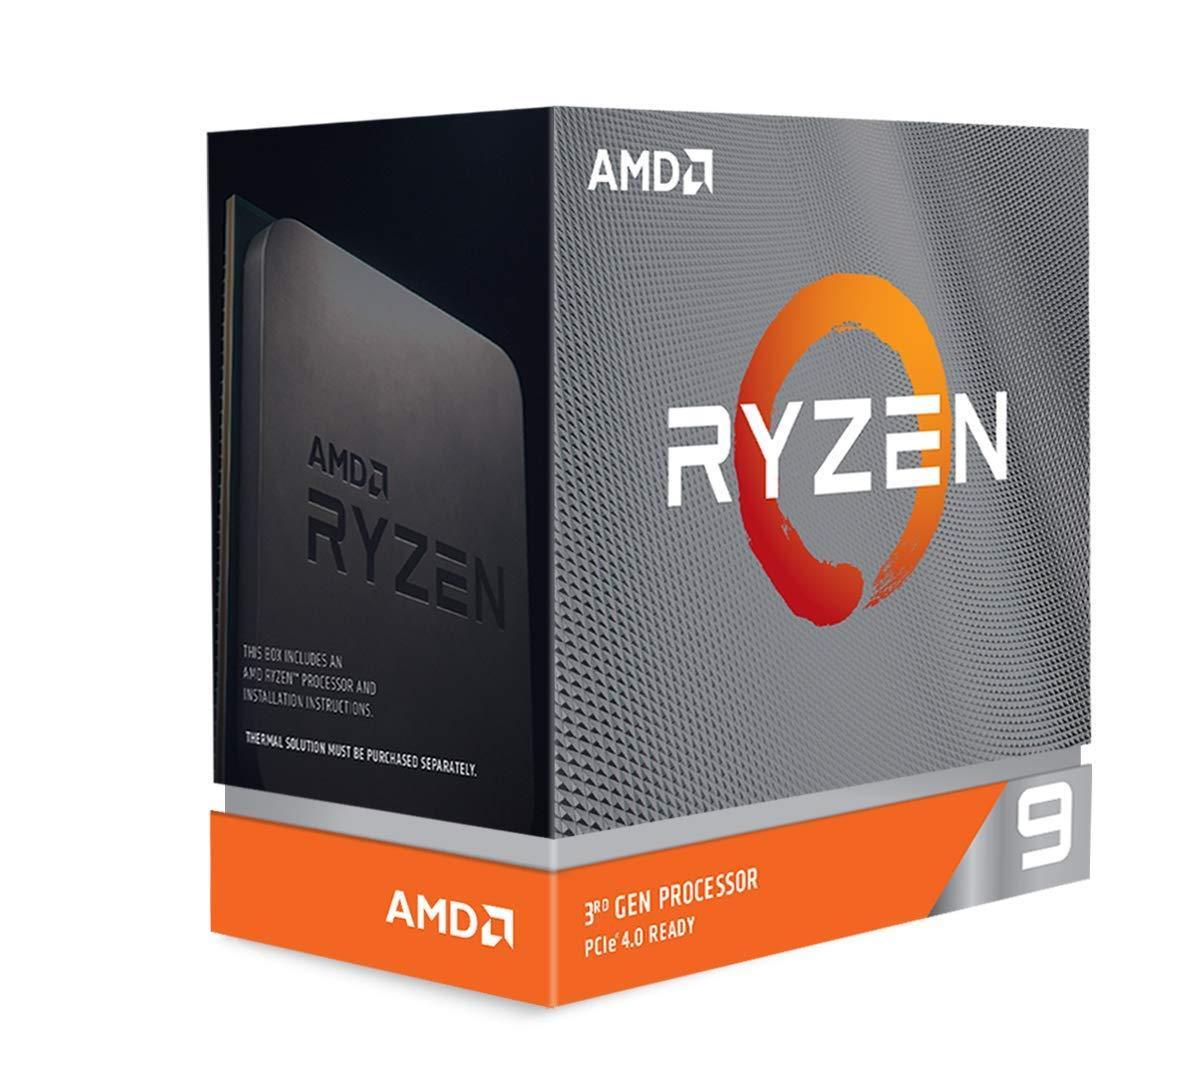 AMD 3000 Series Ryzen 9 3900XT Desktop Processor 12 cores 24 Threads-Processor-dealsplant